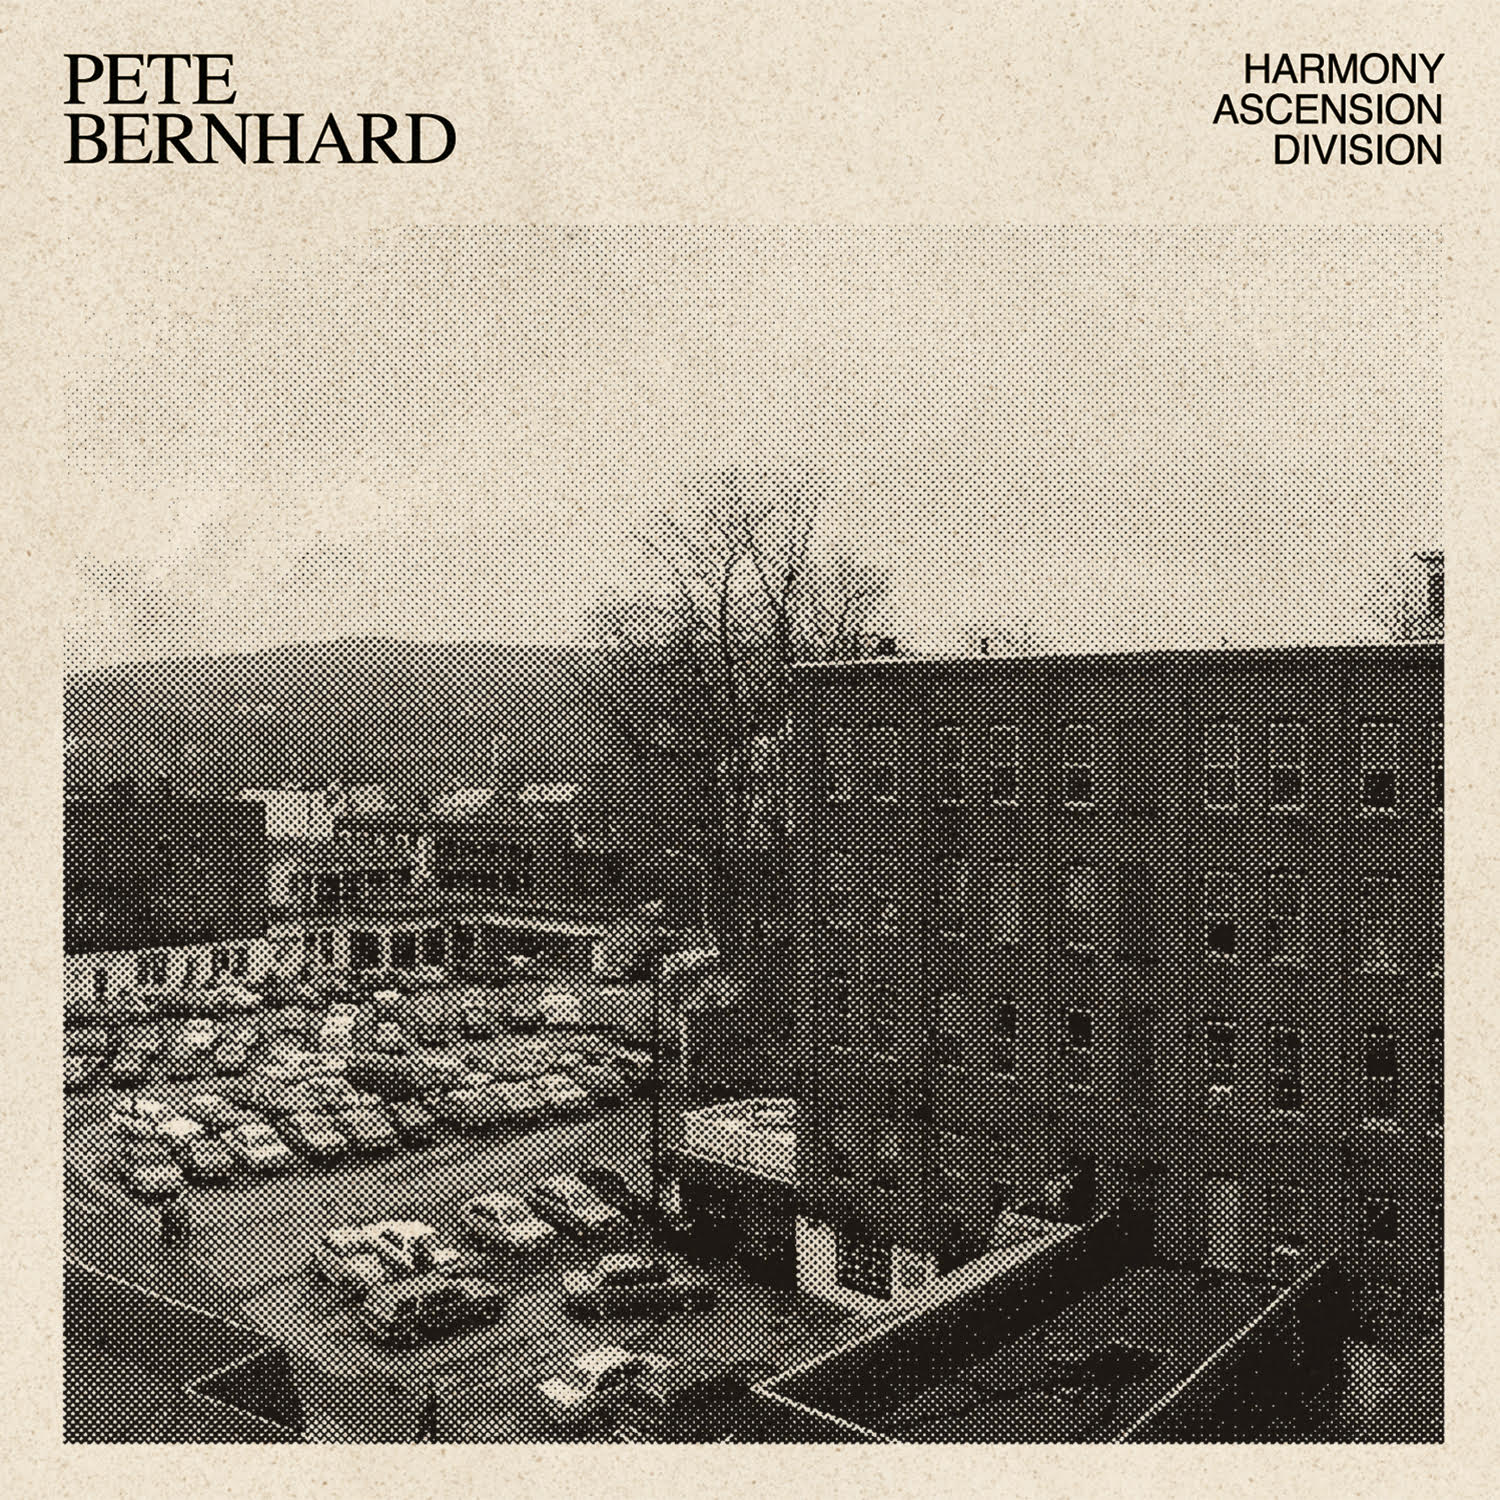 Pete Bernhard: Harmony Ascension Division